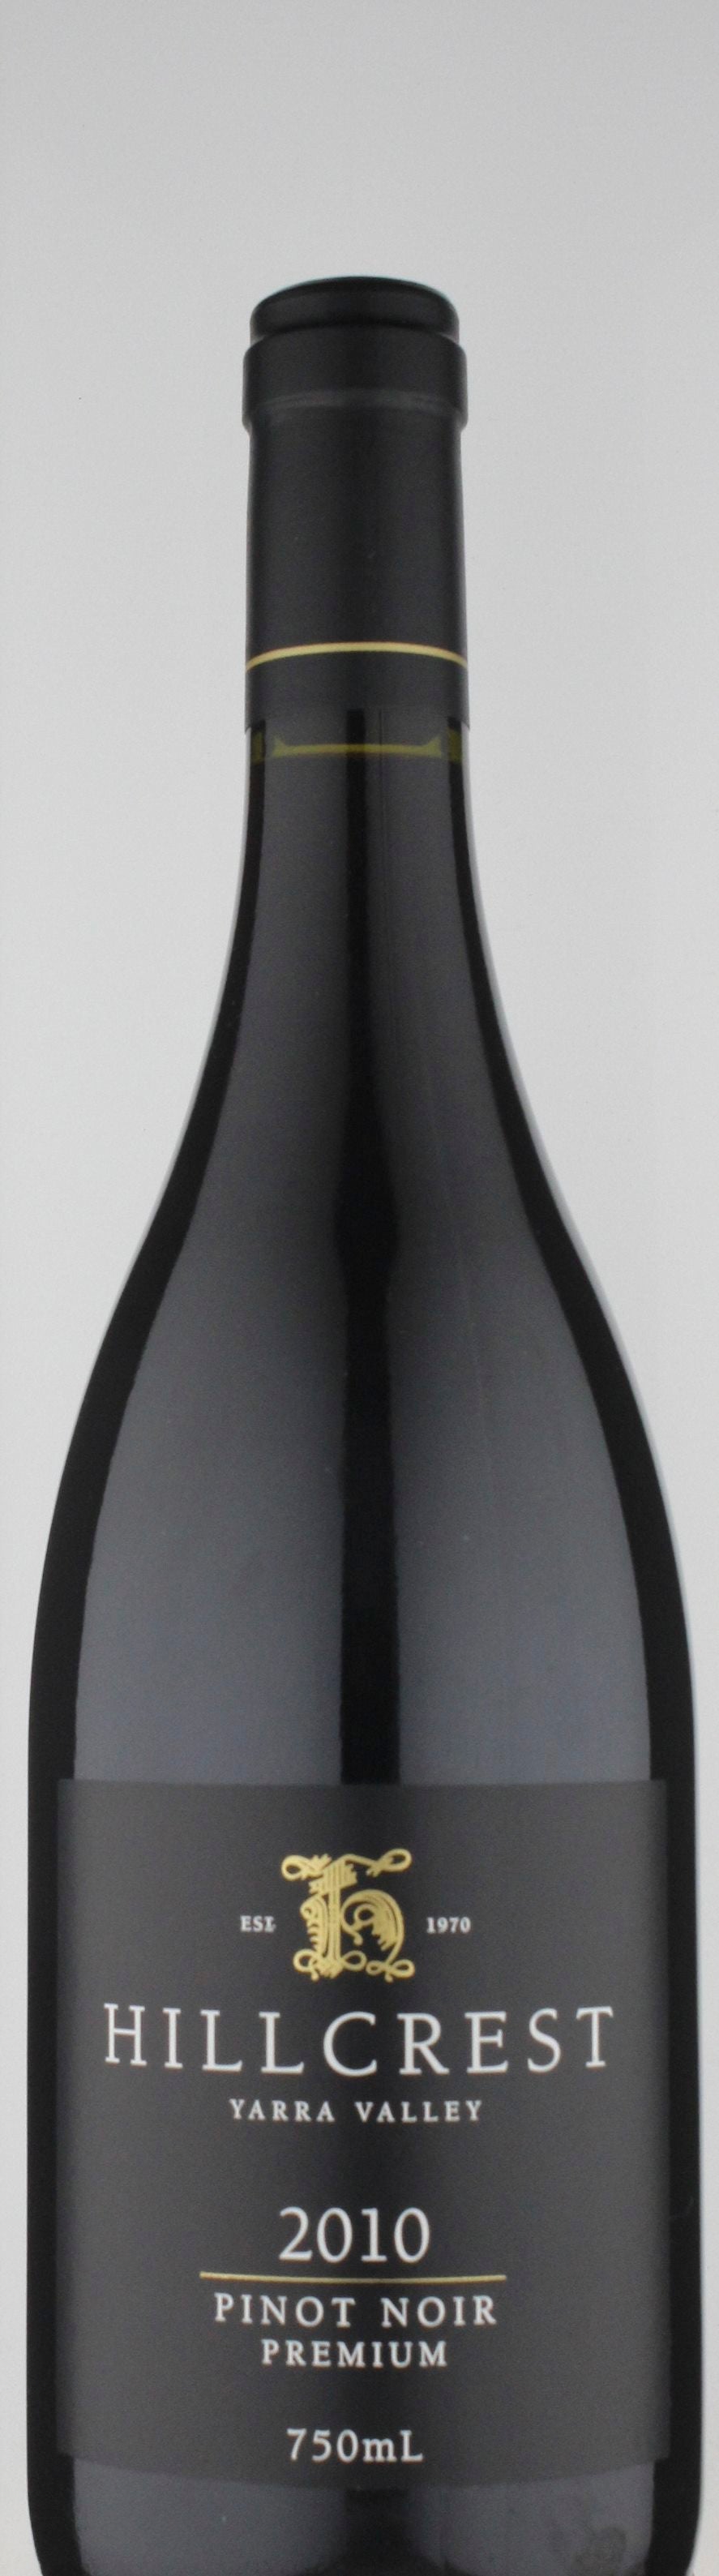 Hillcrest Premium Pinot Noir 2010